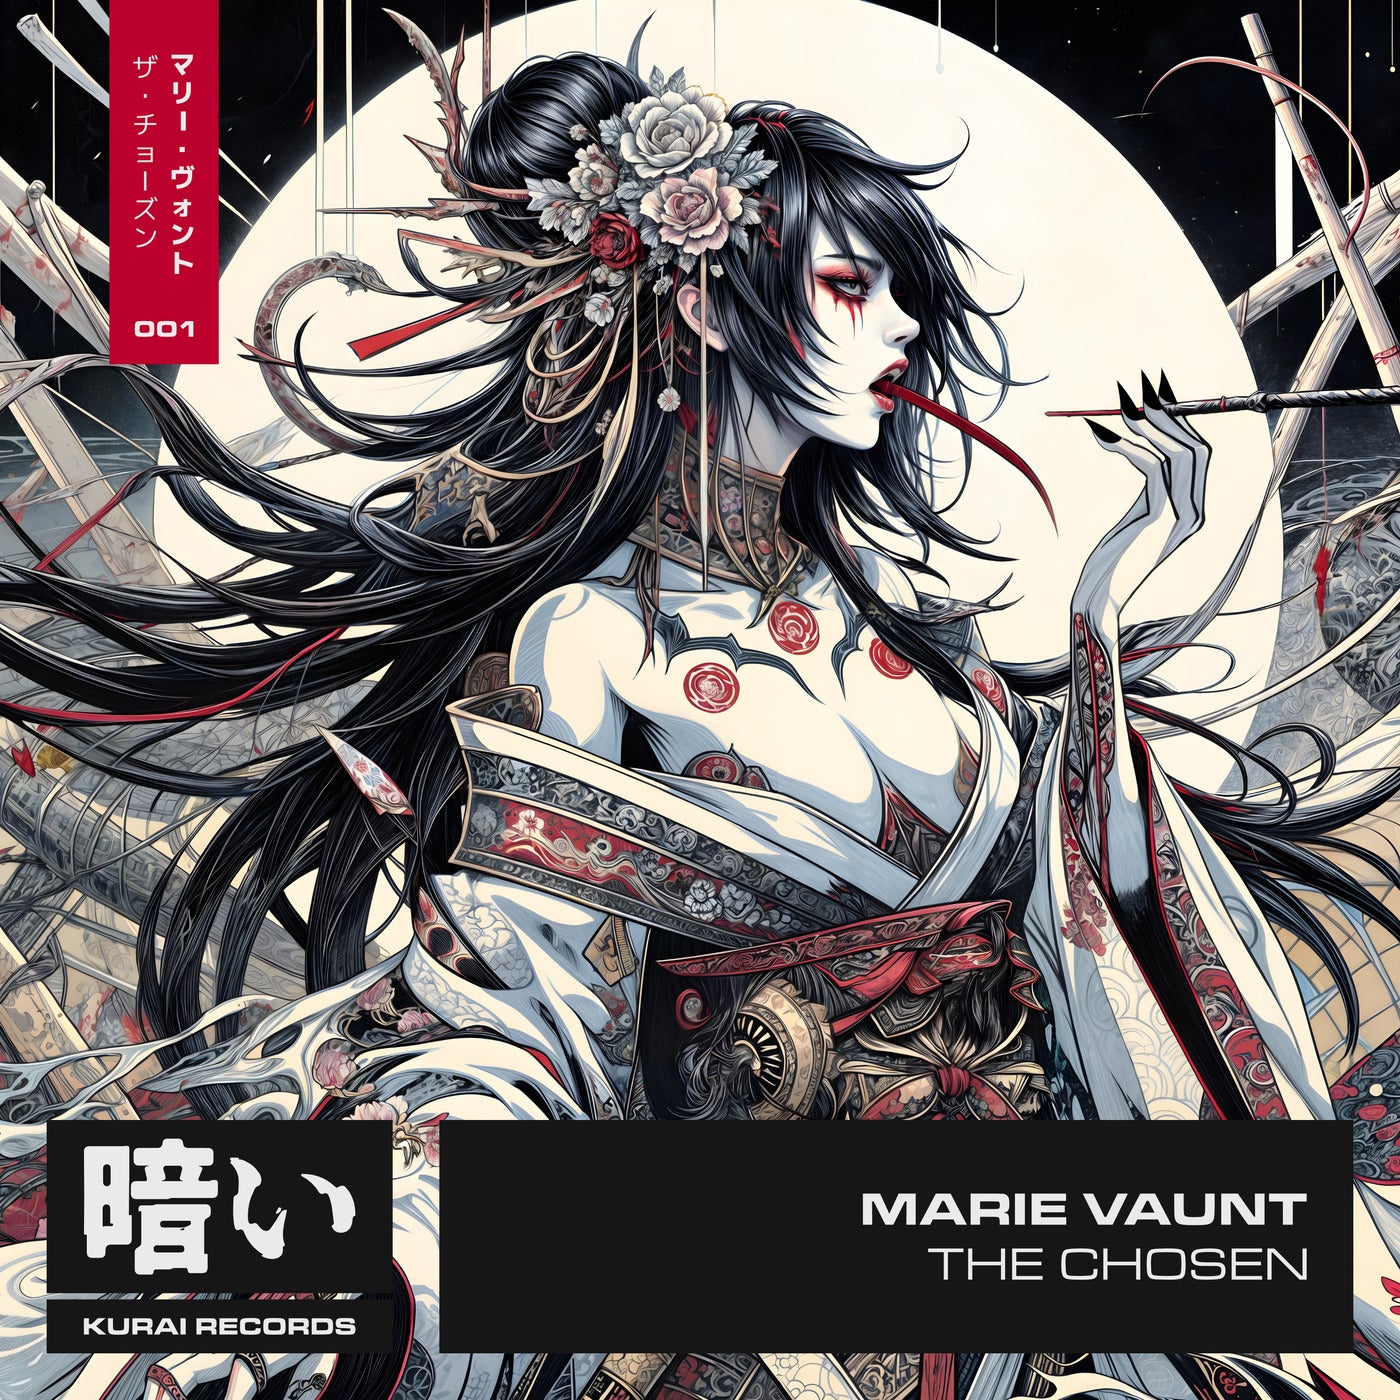 image cover: Marie Vaunt - The Chosen on Kurai Records